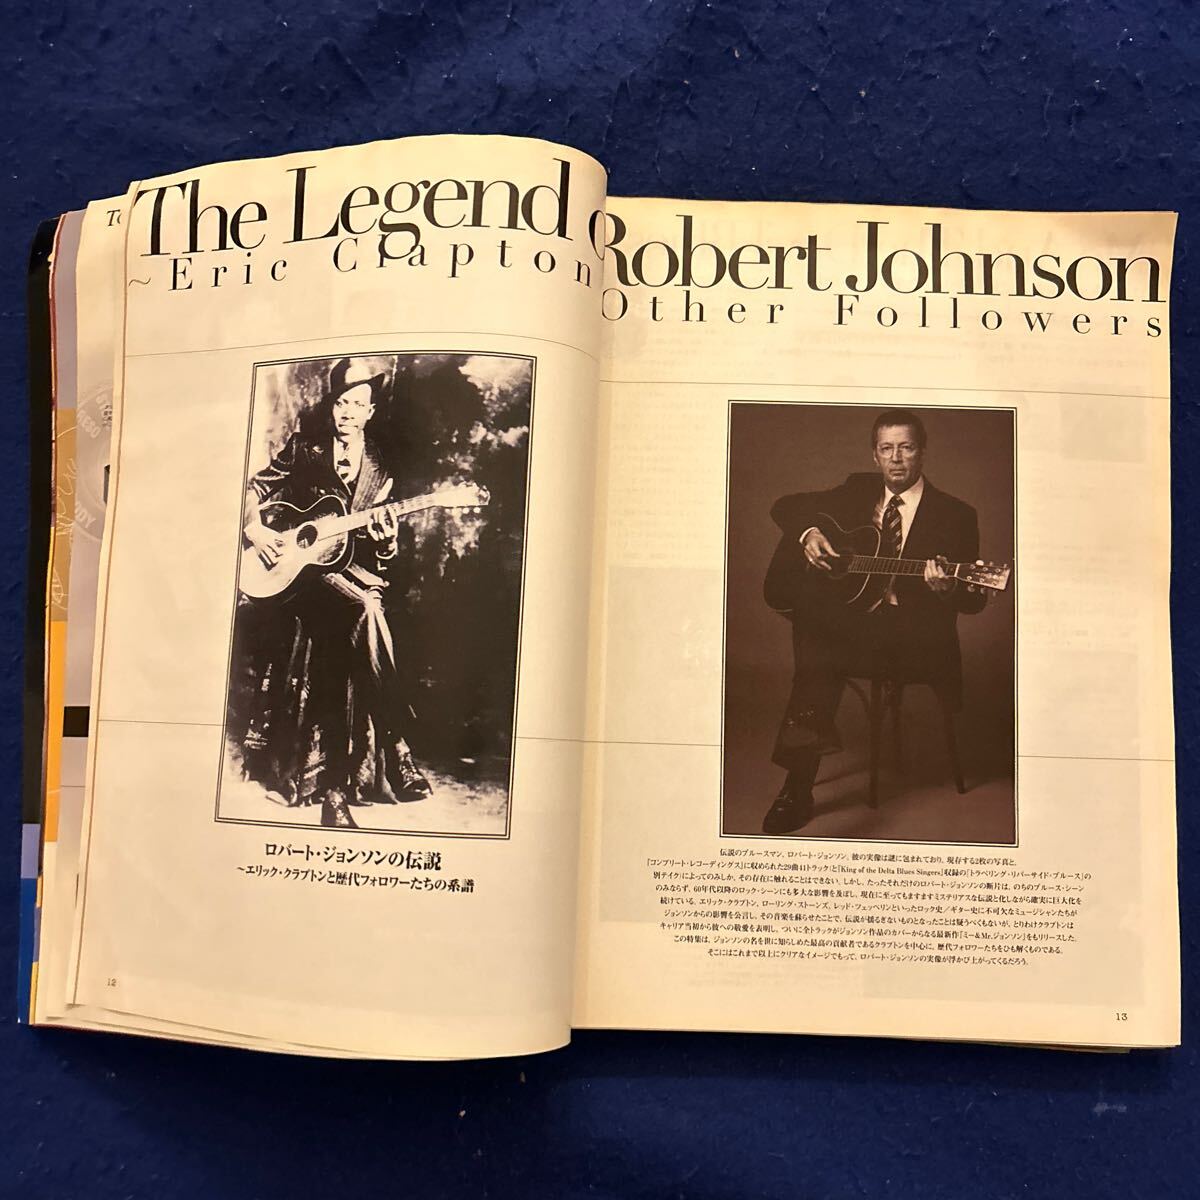 Guitar magazine◆2004年5月号◆CD付録付き◆The Legend of Robert Johnson◆菊田俊介_画像4